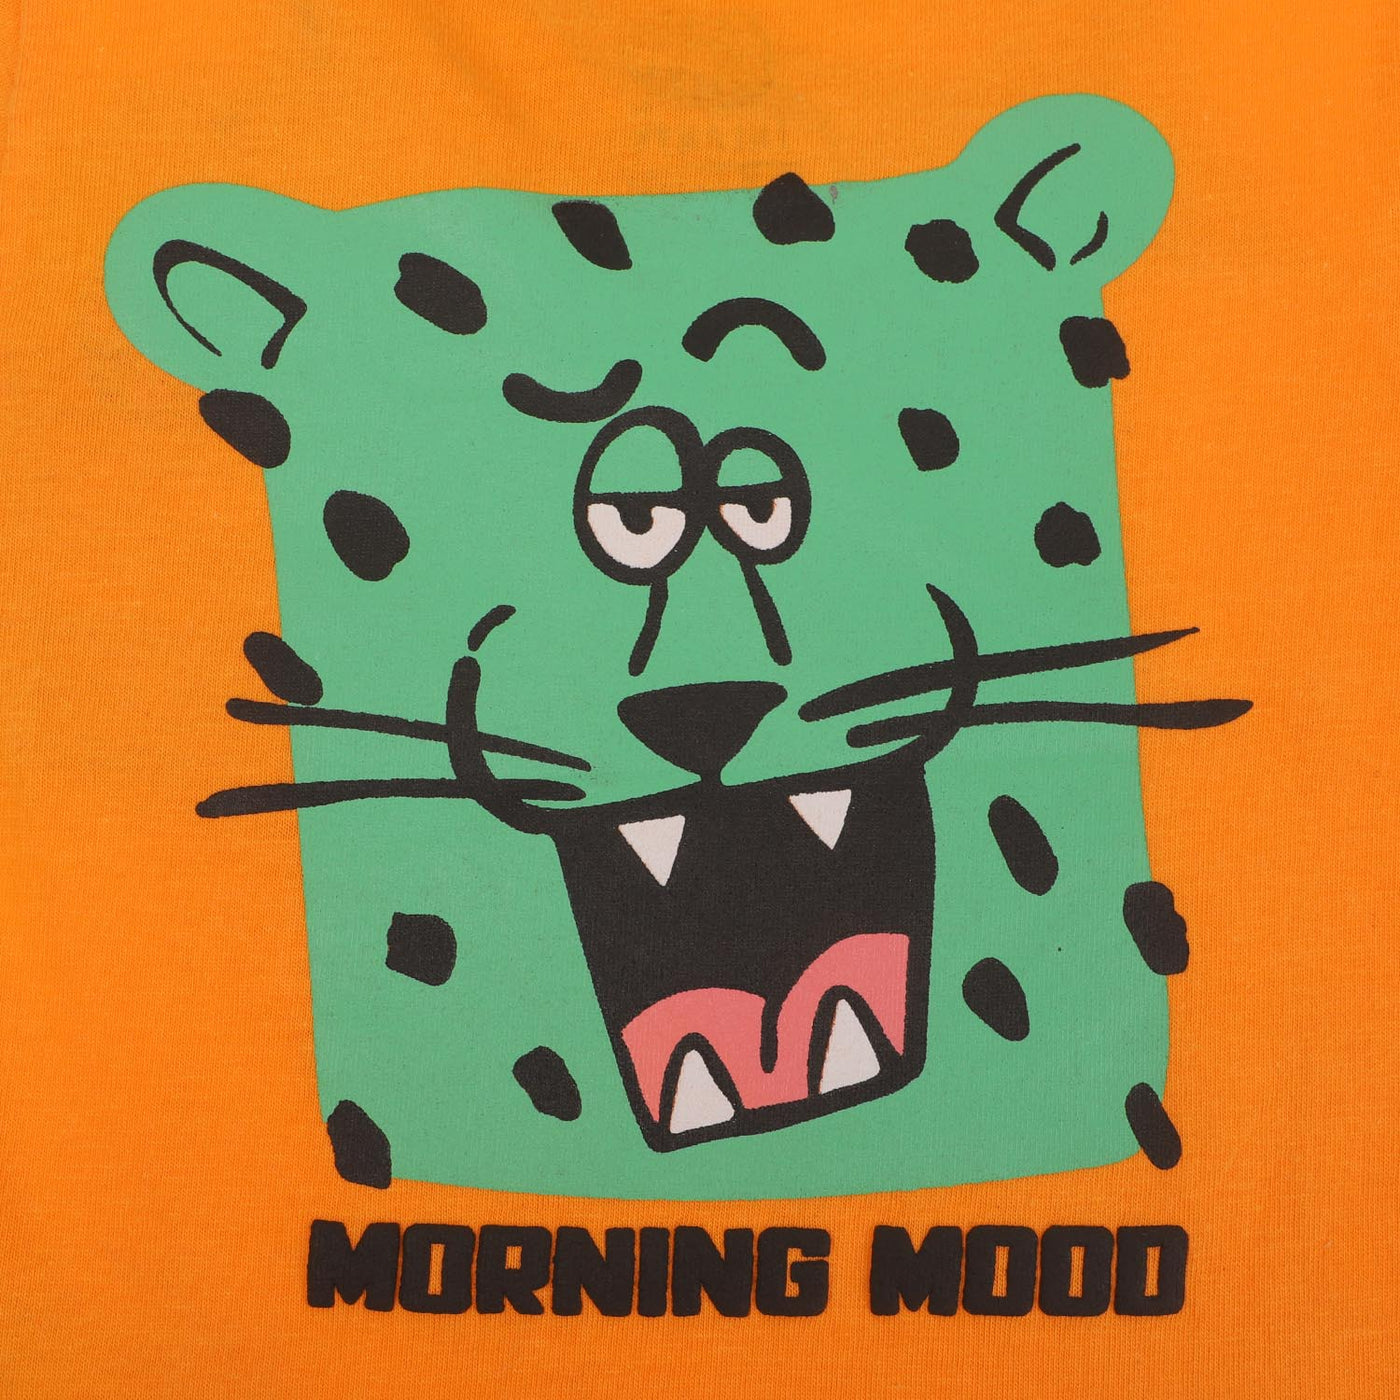 Infant Boys Cotton T-Shirt Morning Mood - Orange